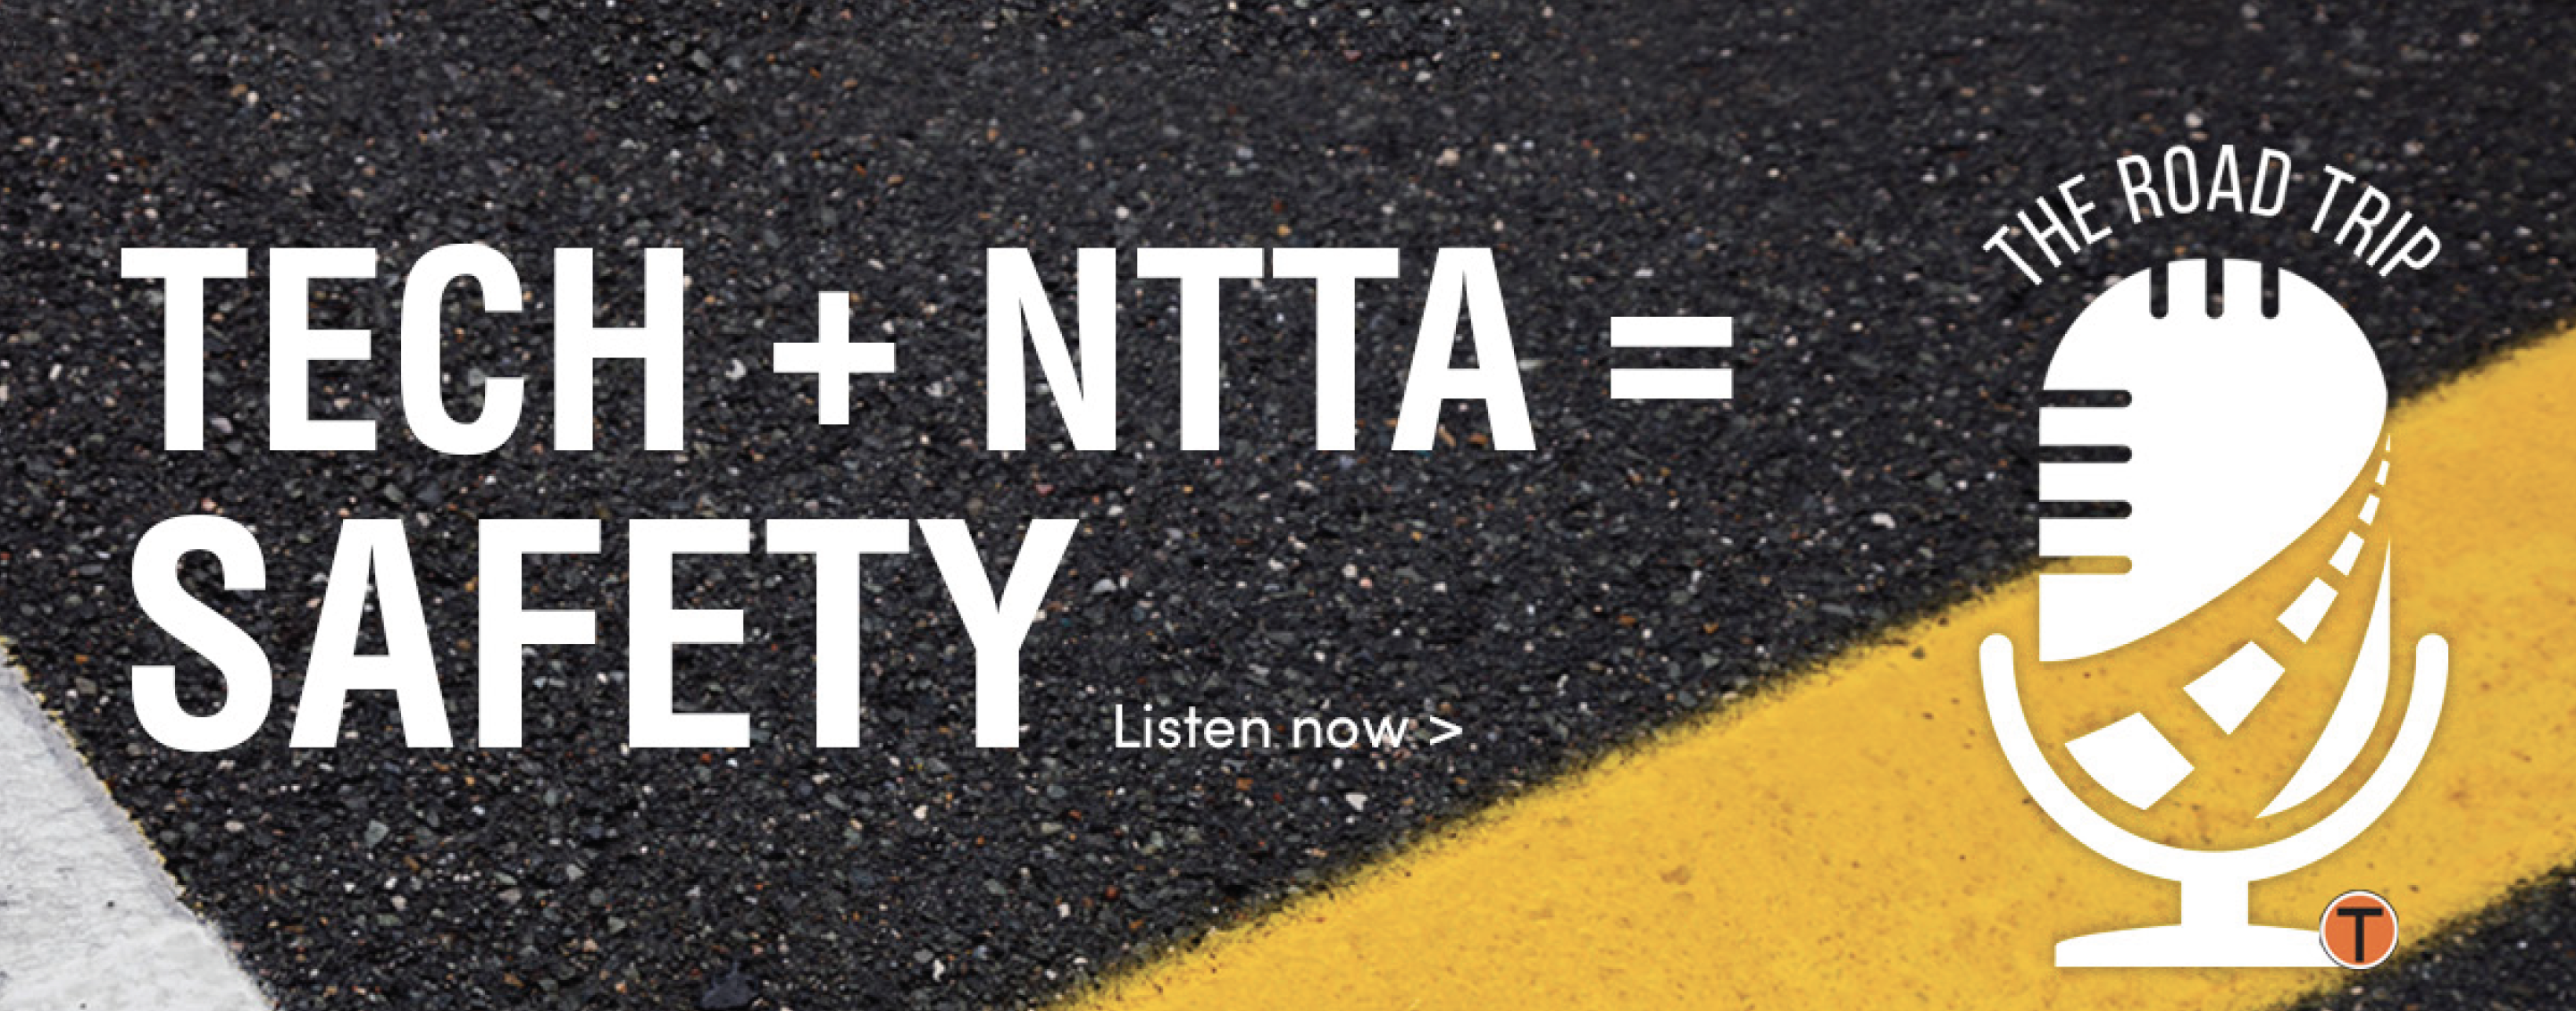 Tech + NTTA = Safety